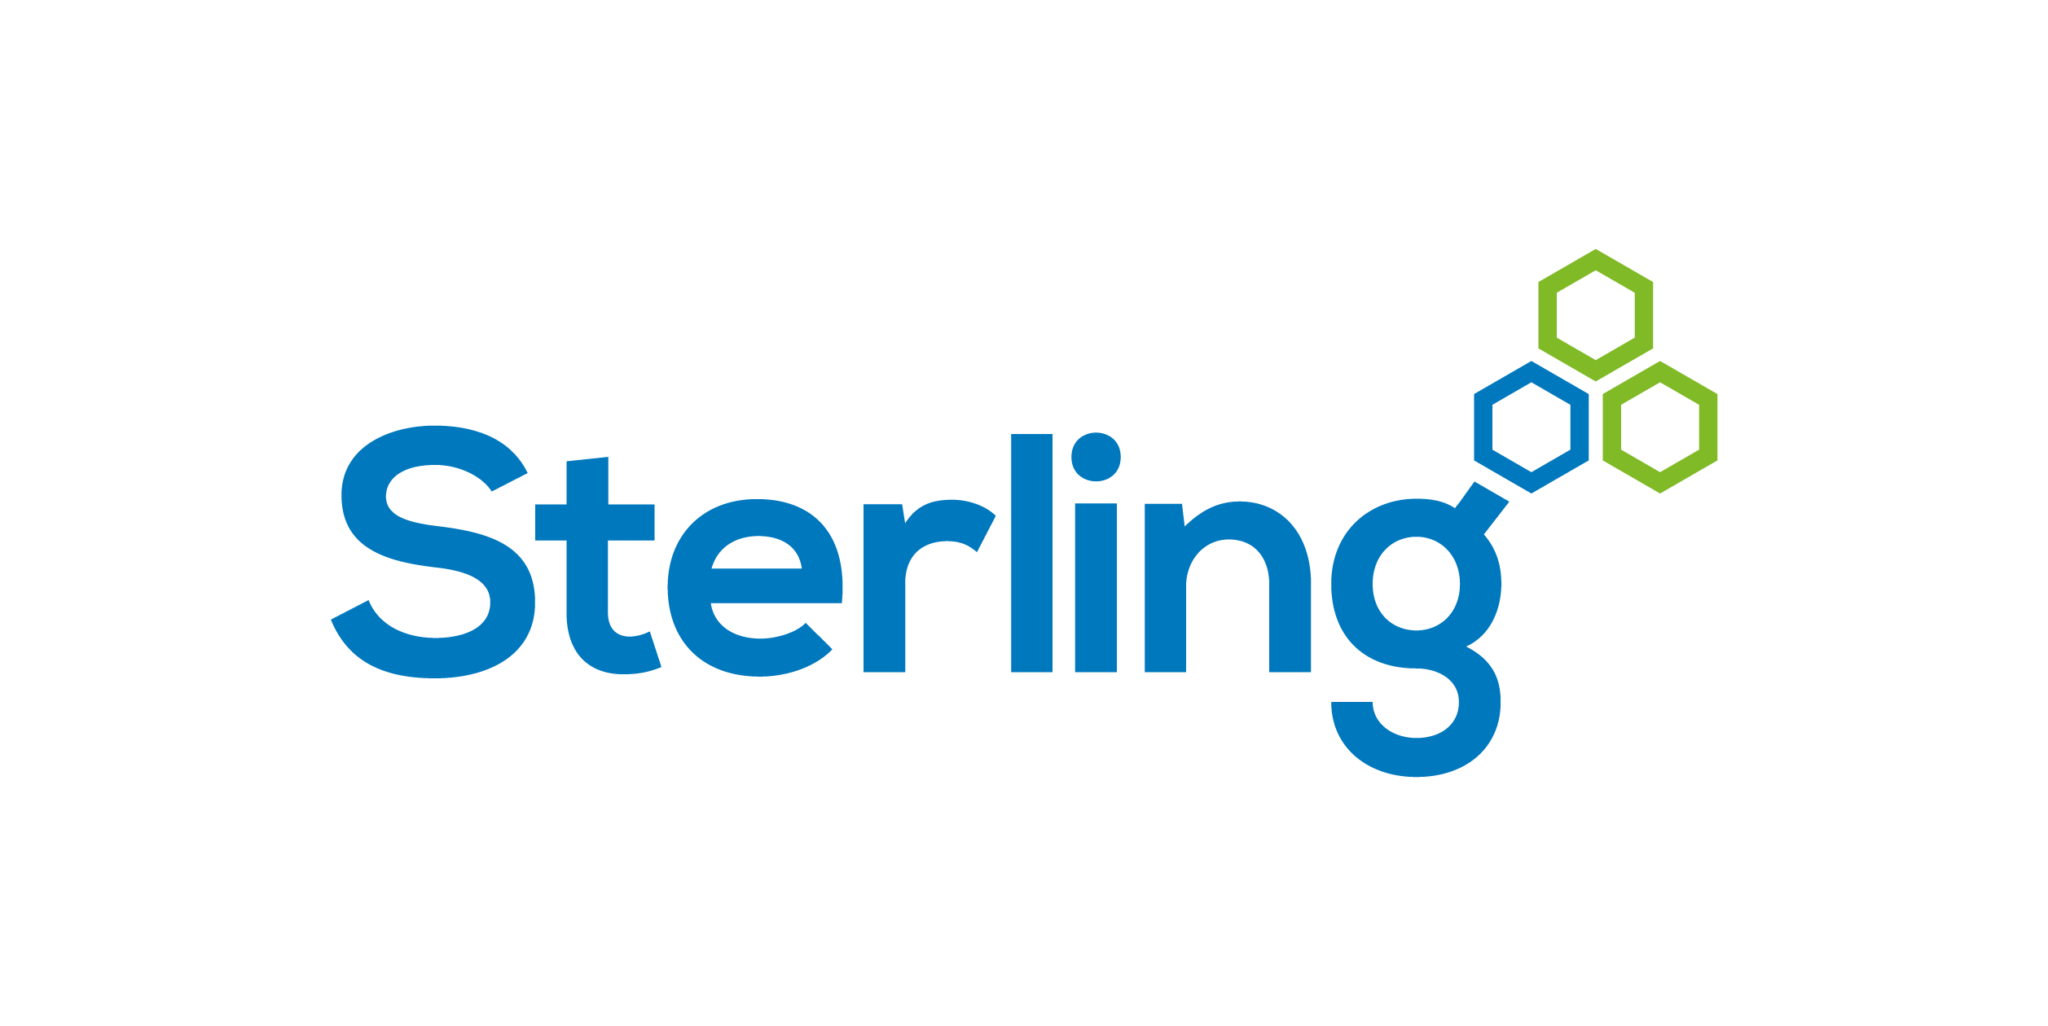 Sterling Pharma